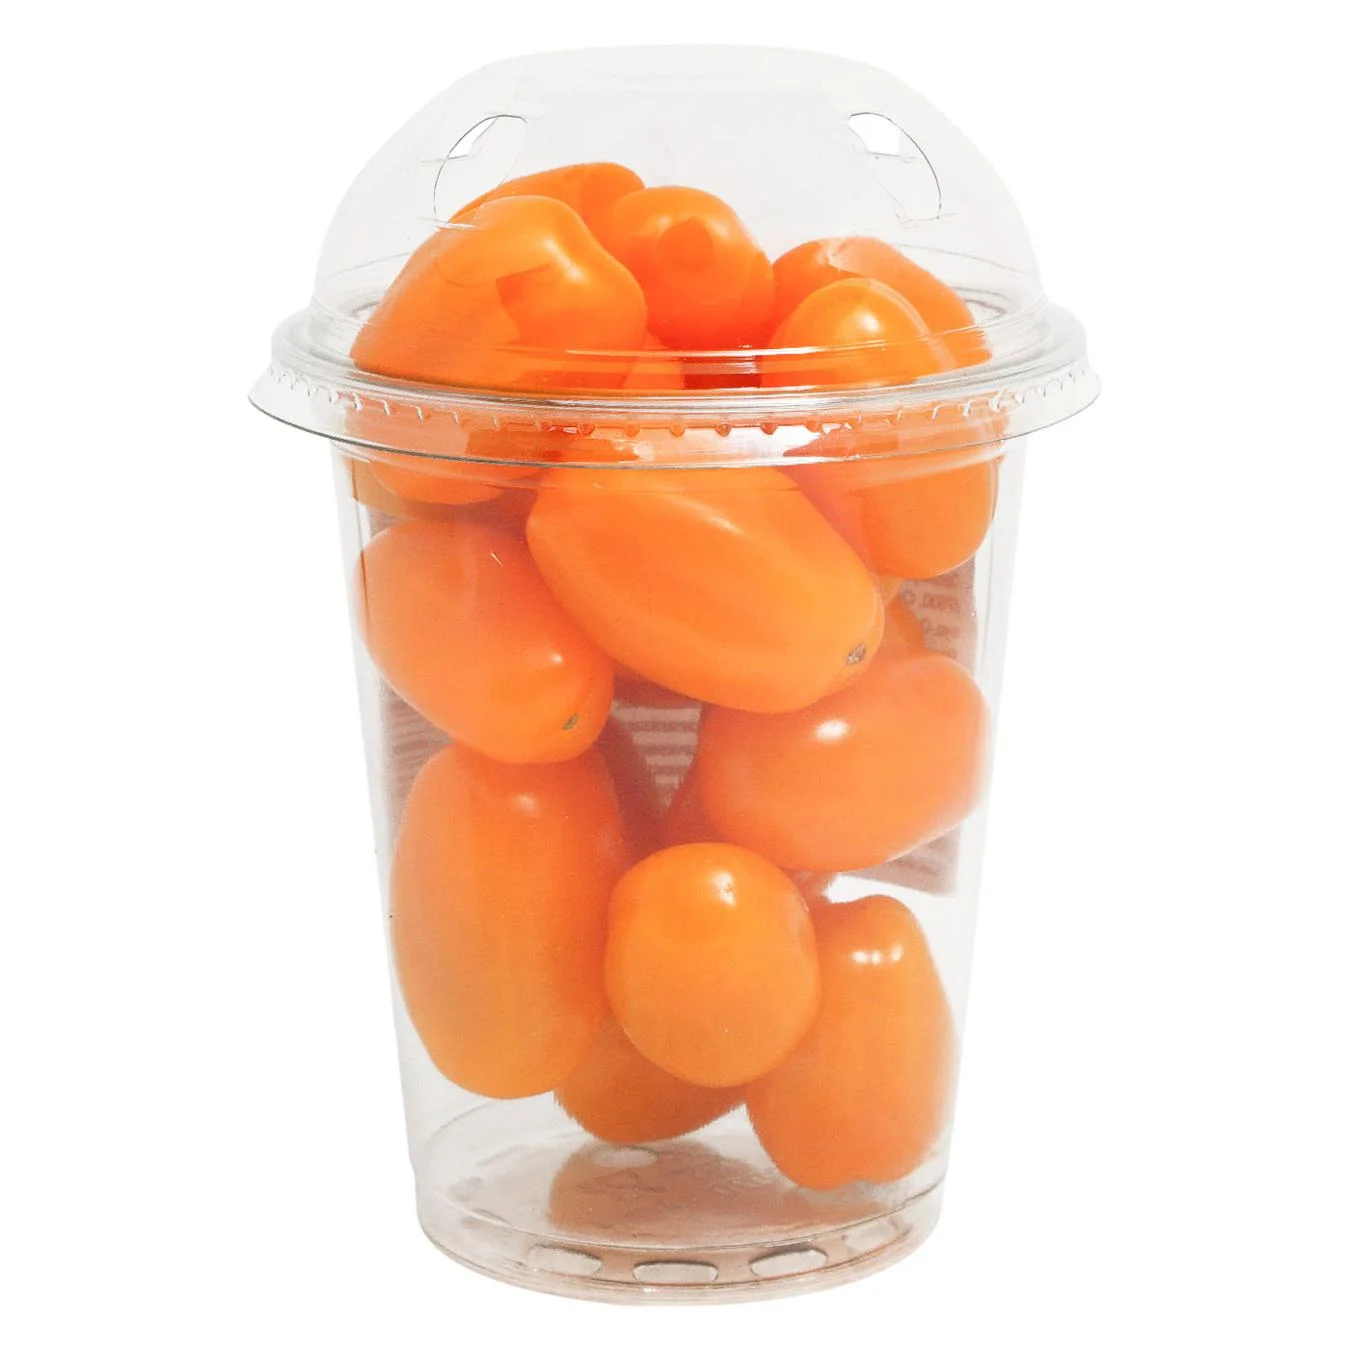 Cherry orange tomatoes 250g